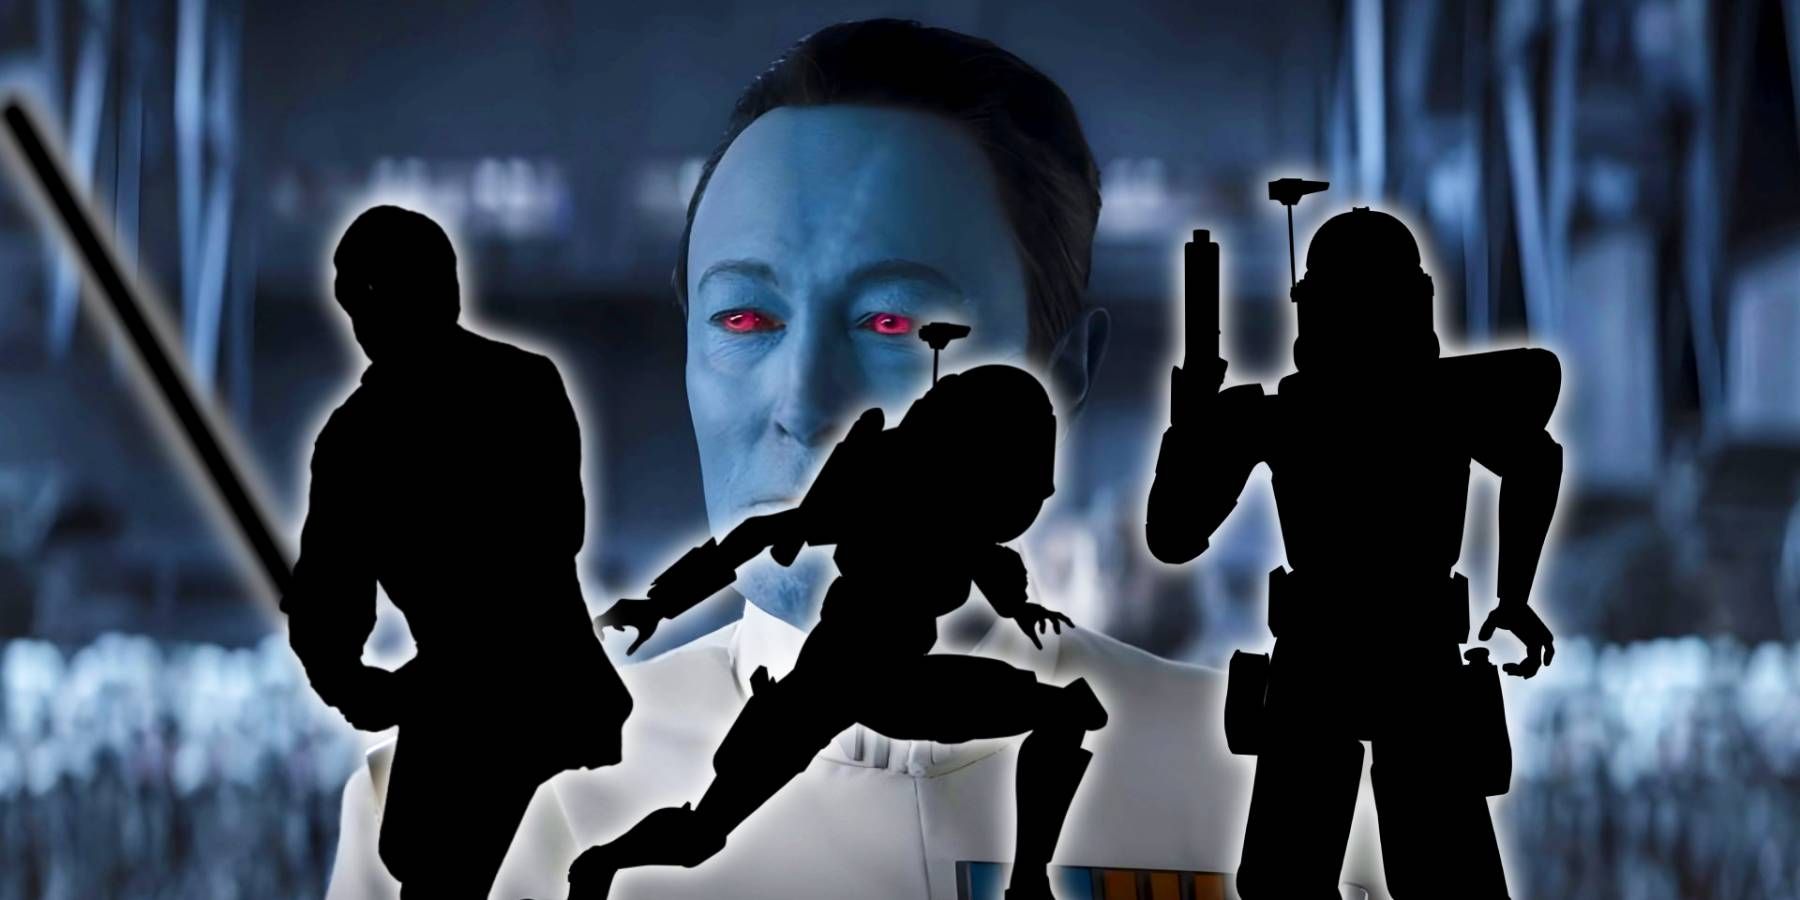 Lars Mikkelsen as Grand Admiral Thrawn with silhouettes of Luke Skywalker, Bo Katan Kryze, and Captain Rex